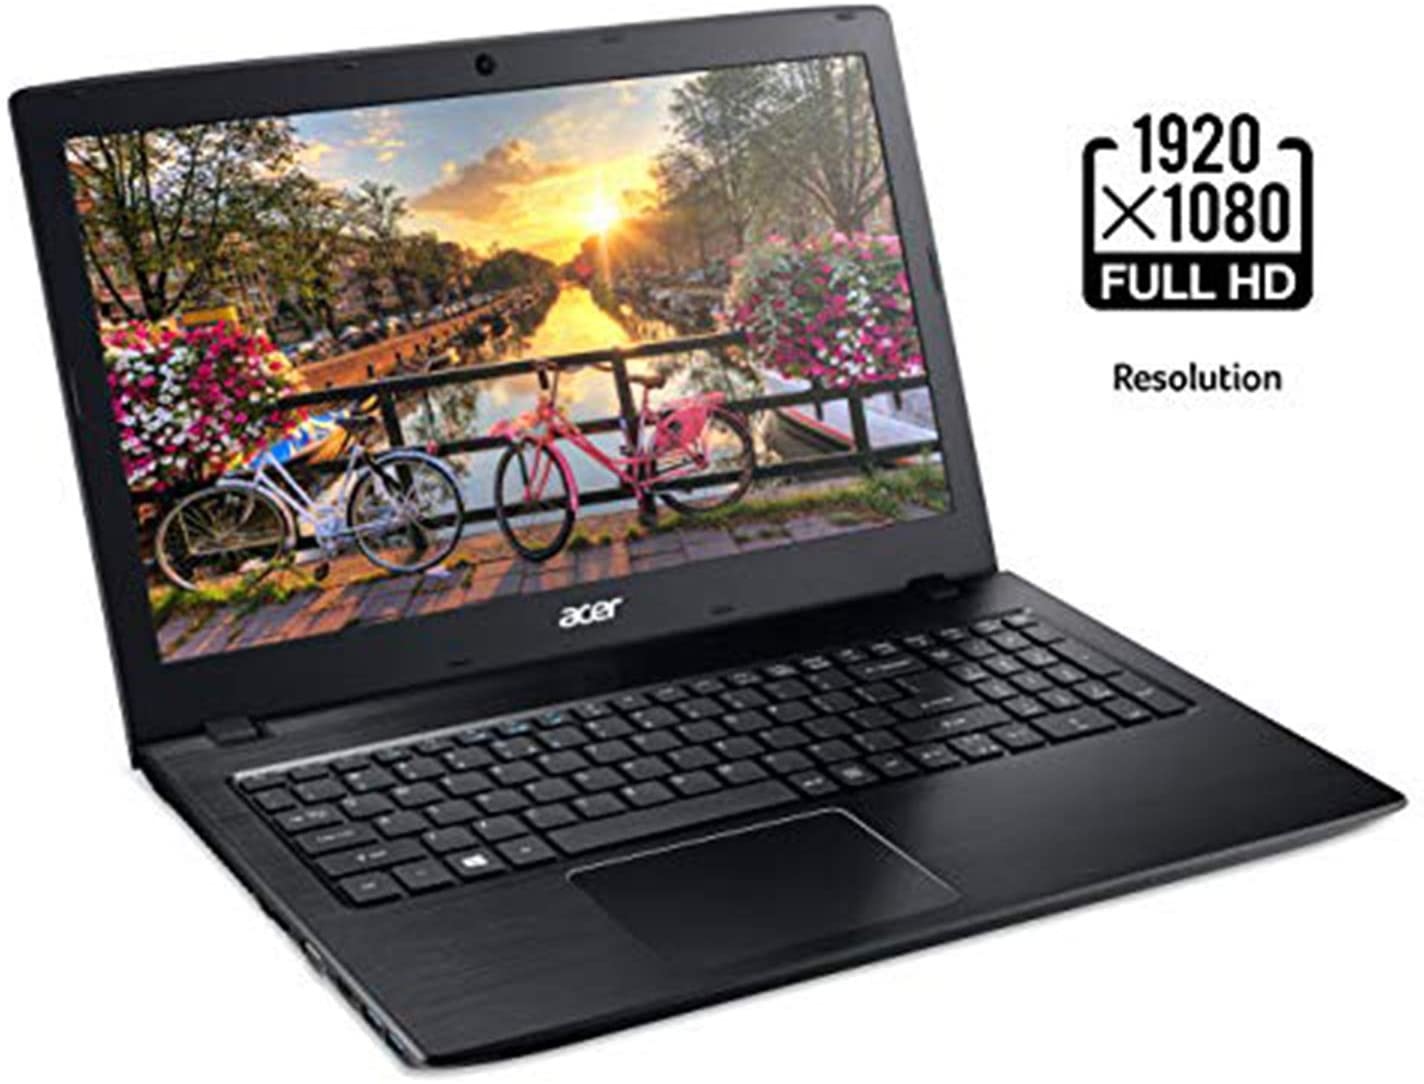 Acer Aspire E 15, 15.6 Full HD, 8th Gen Intel Core i3-8130U, 6GB